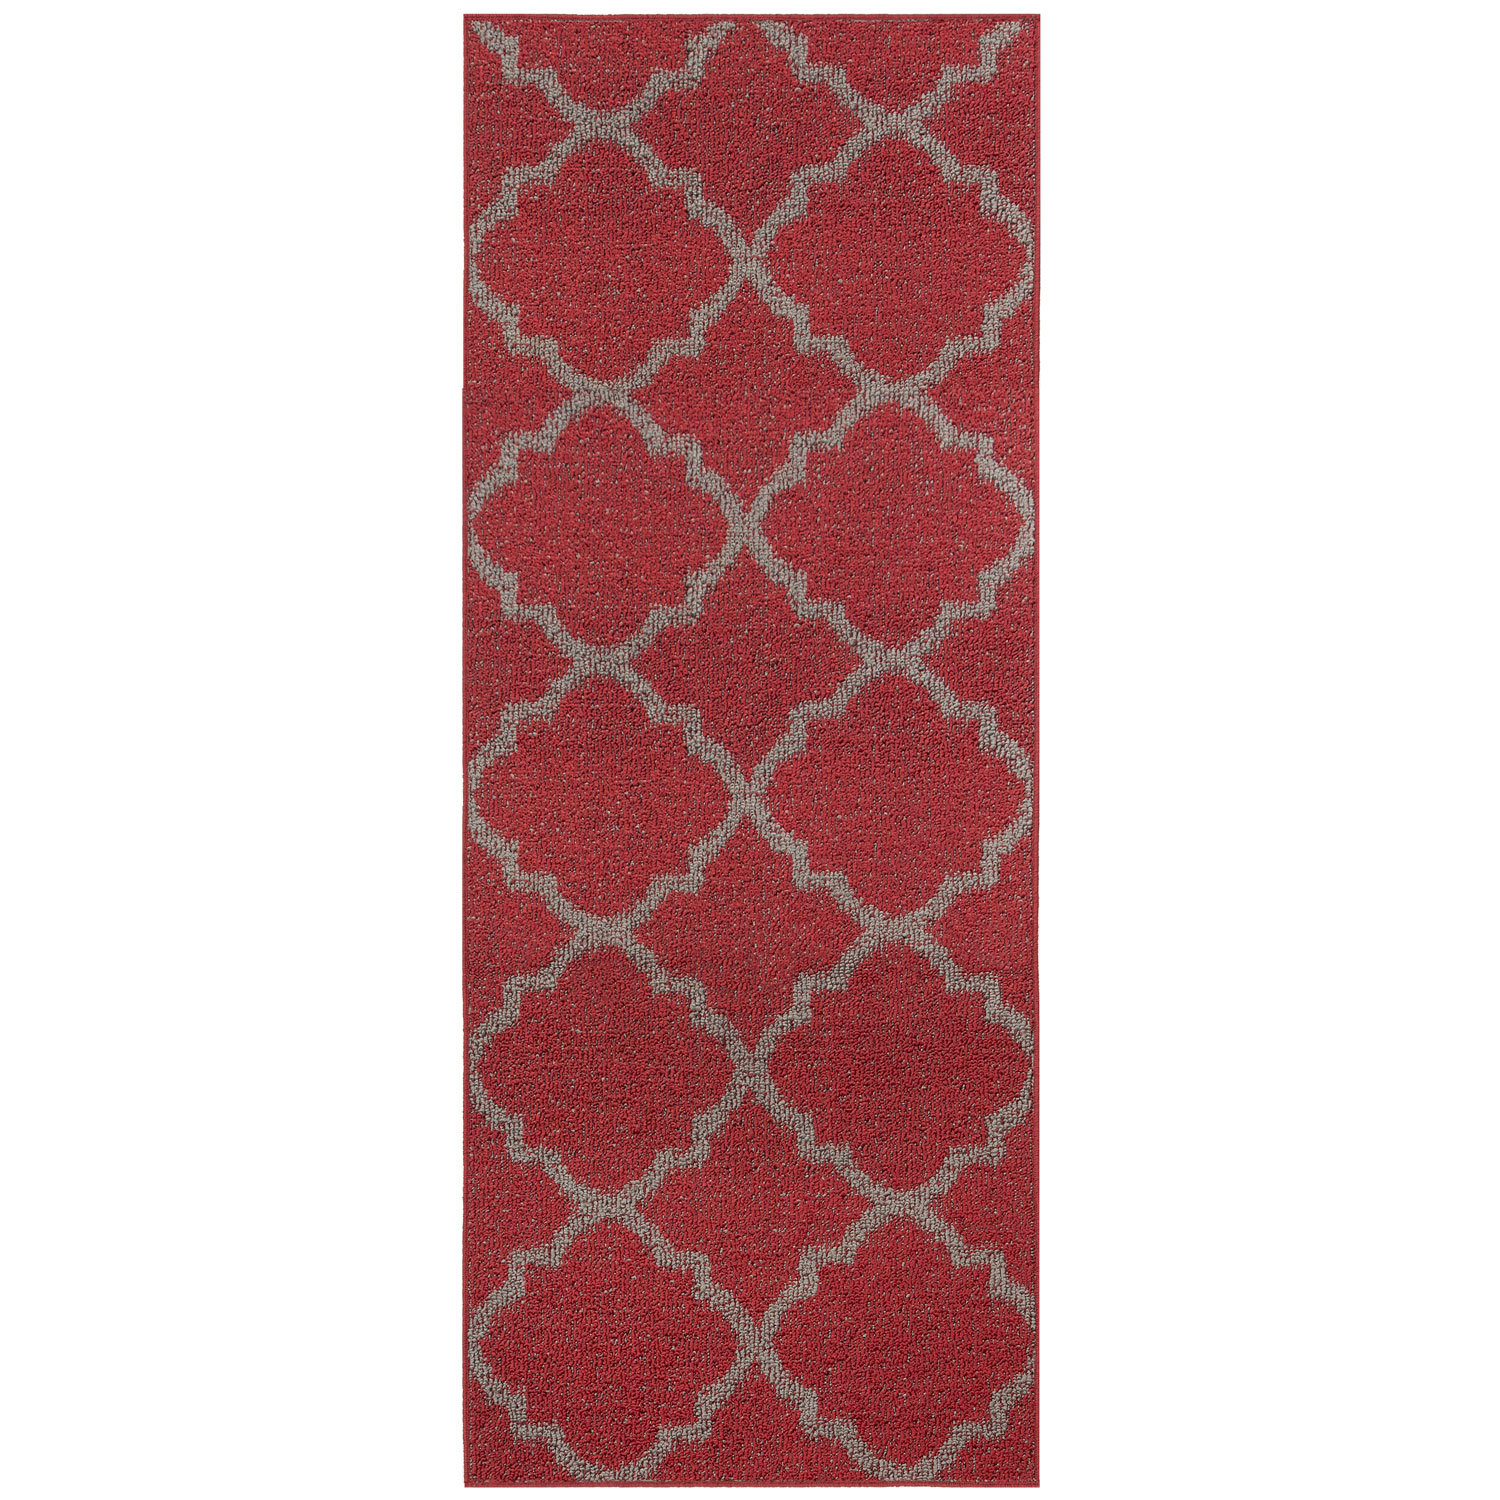 CASABLANCA Collection, rug, cayenne, 2'x5'